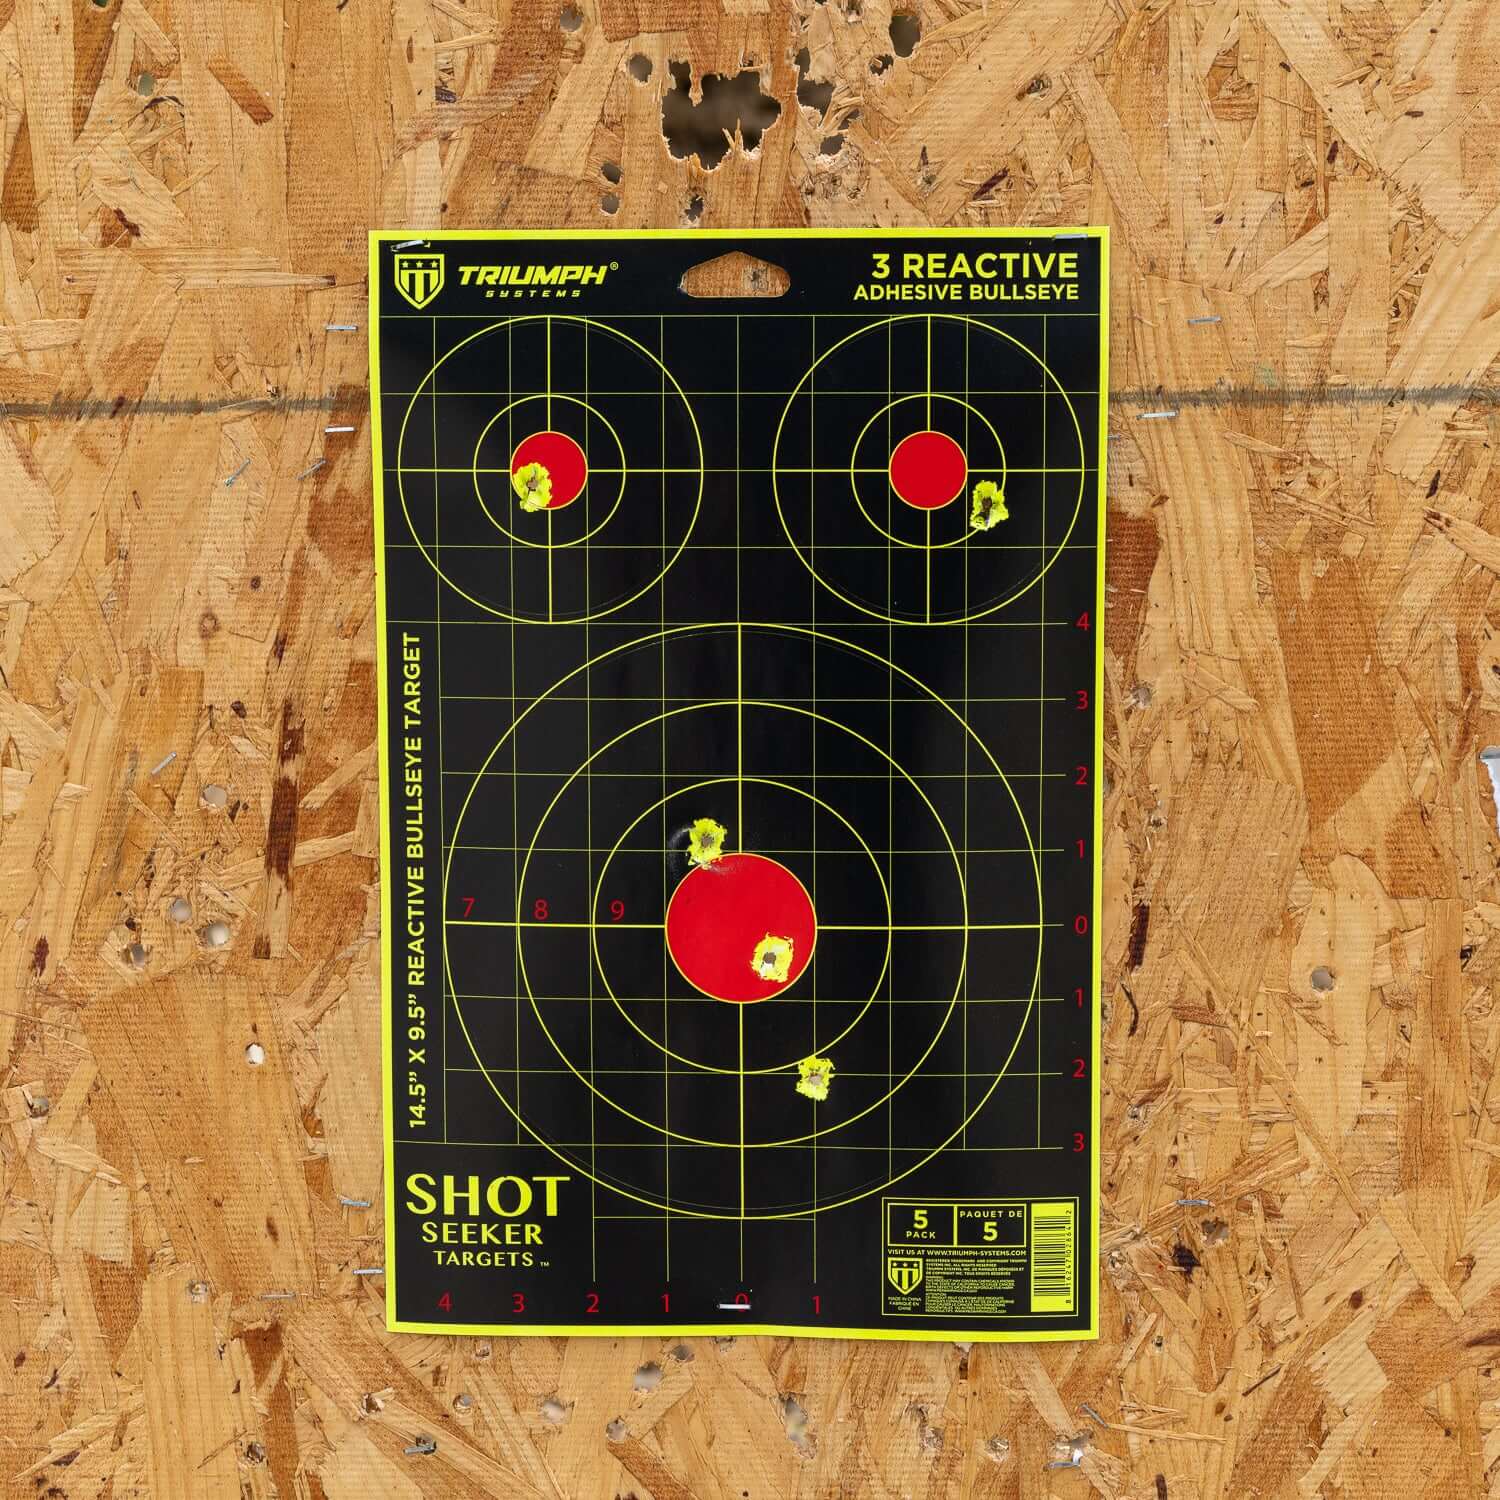 Shot Seeker with 3 Asst Size Reactive Adhesive Bullseyes - 5PK